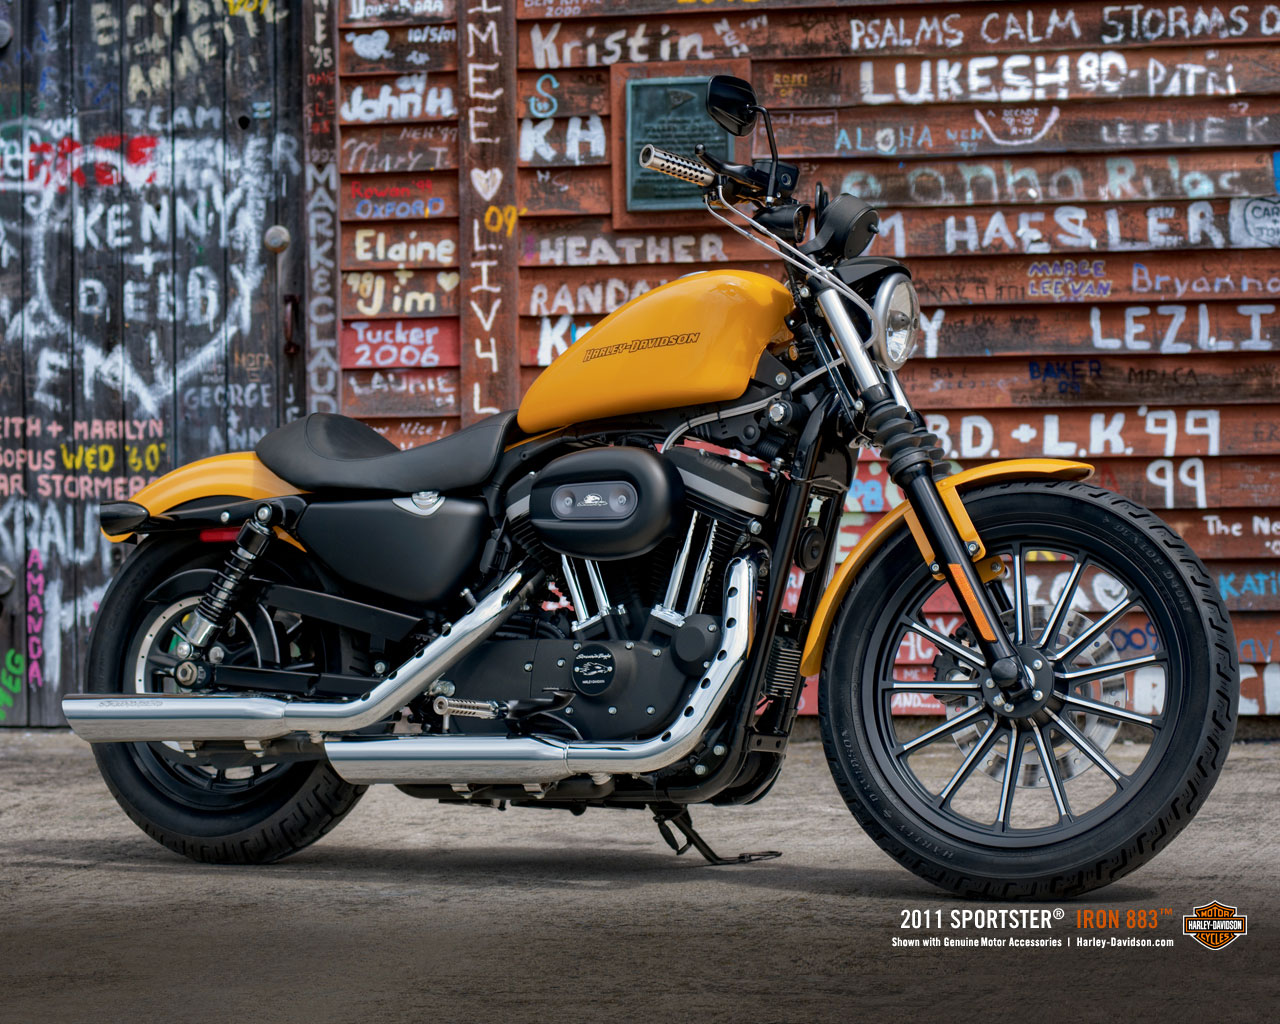 Harley-Davidson H-D1